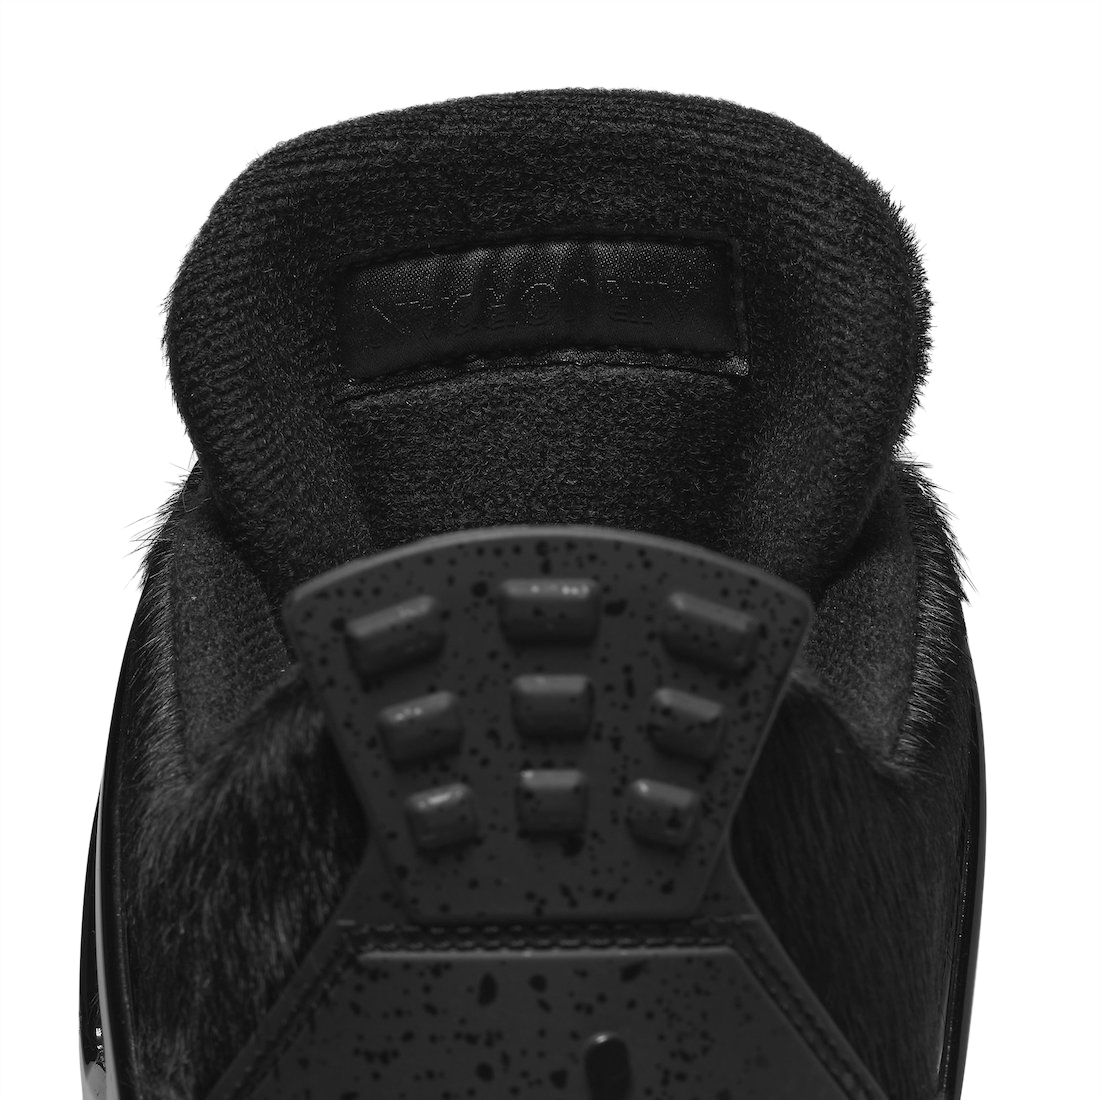 Air Jordan 4 Golf Black Cat - Dec 2021 - CU9981-001